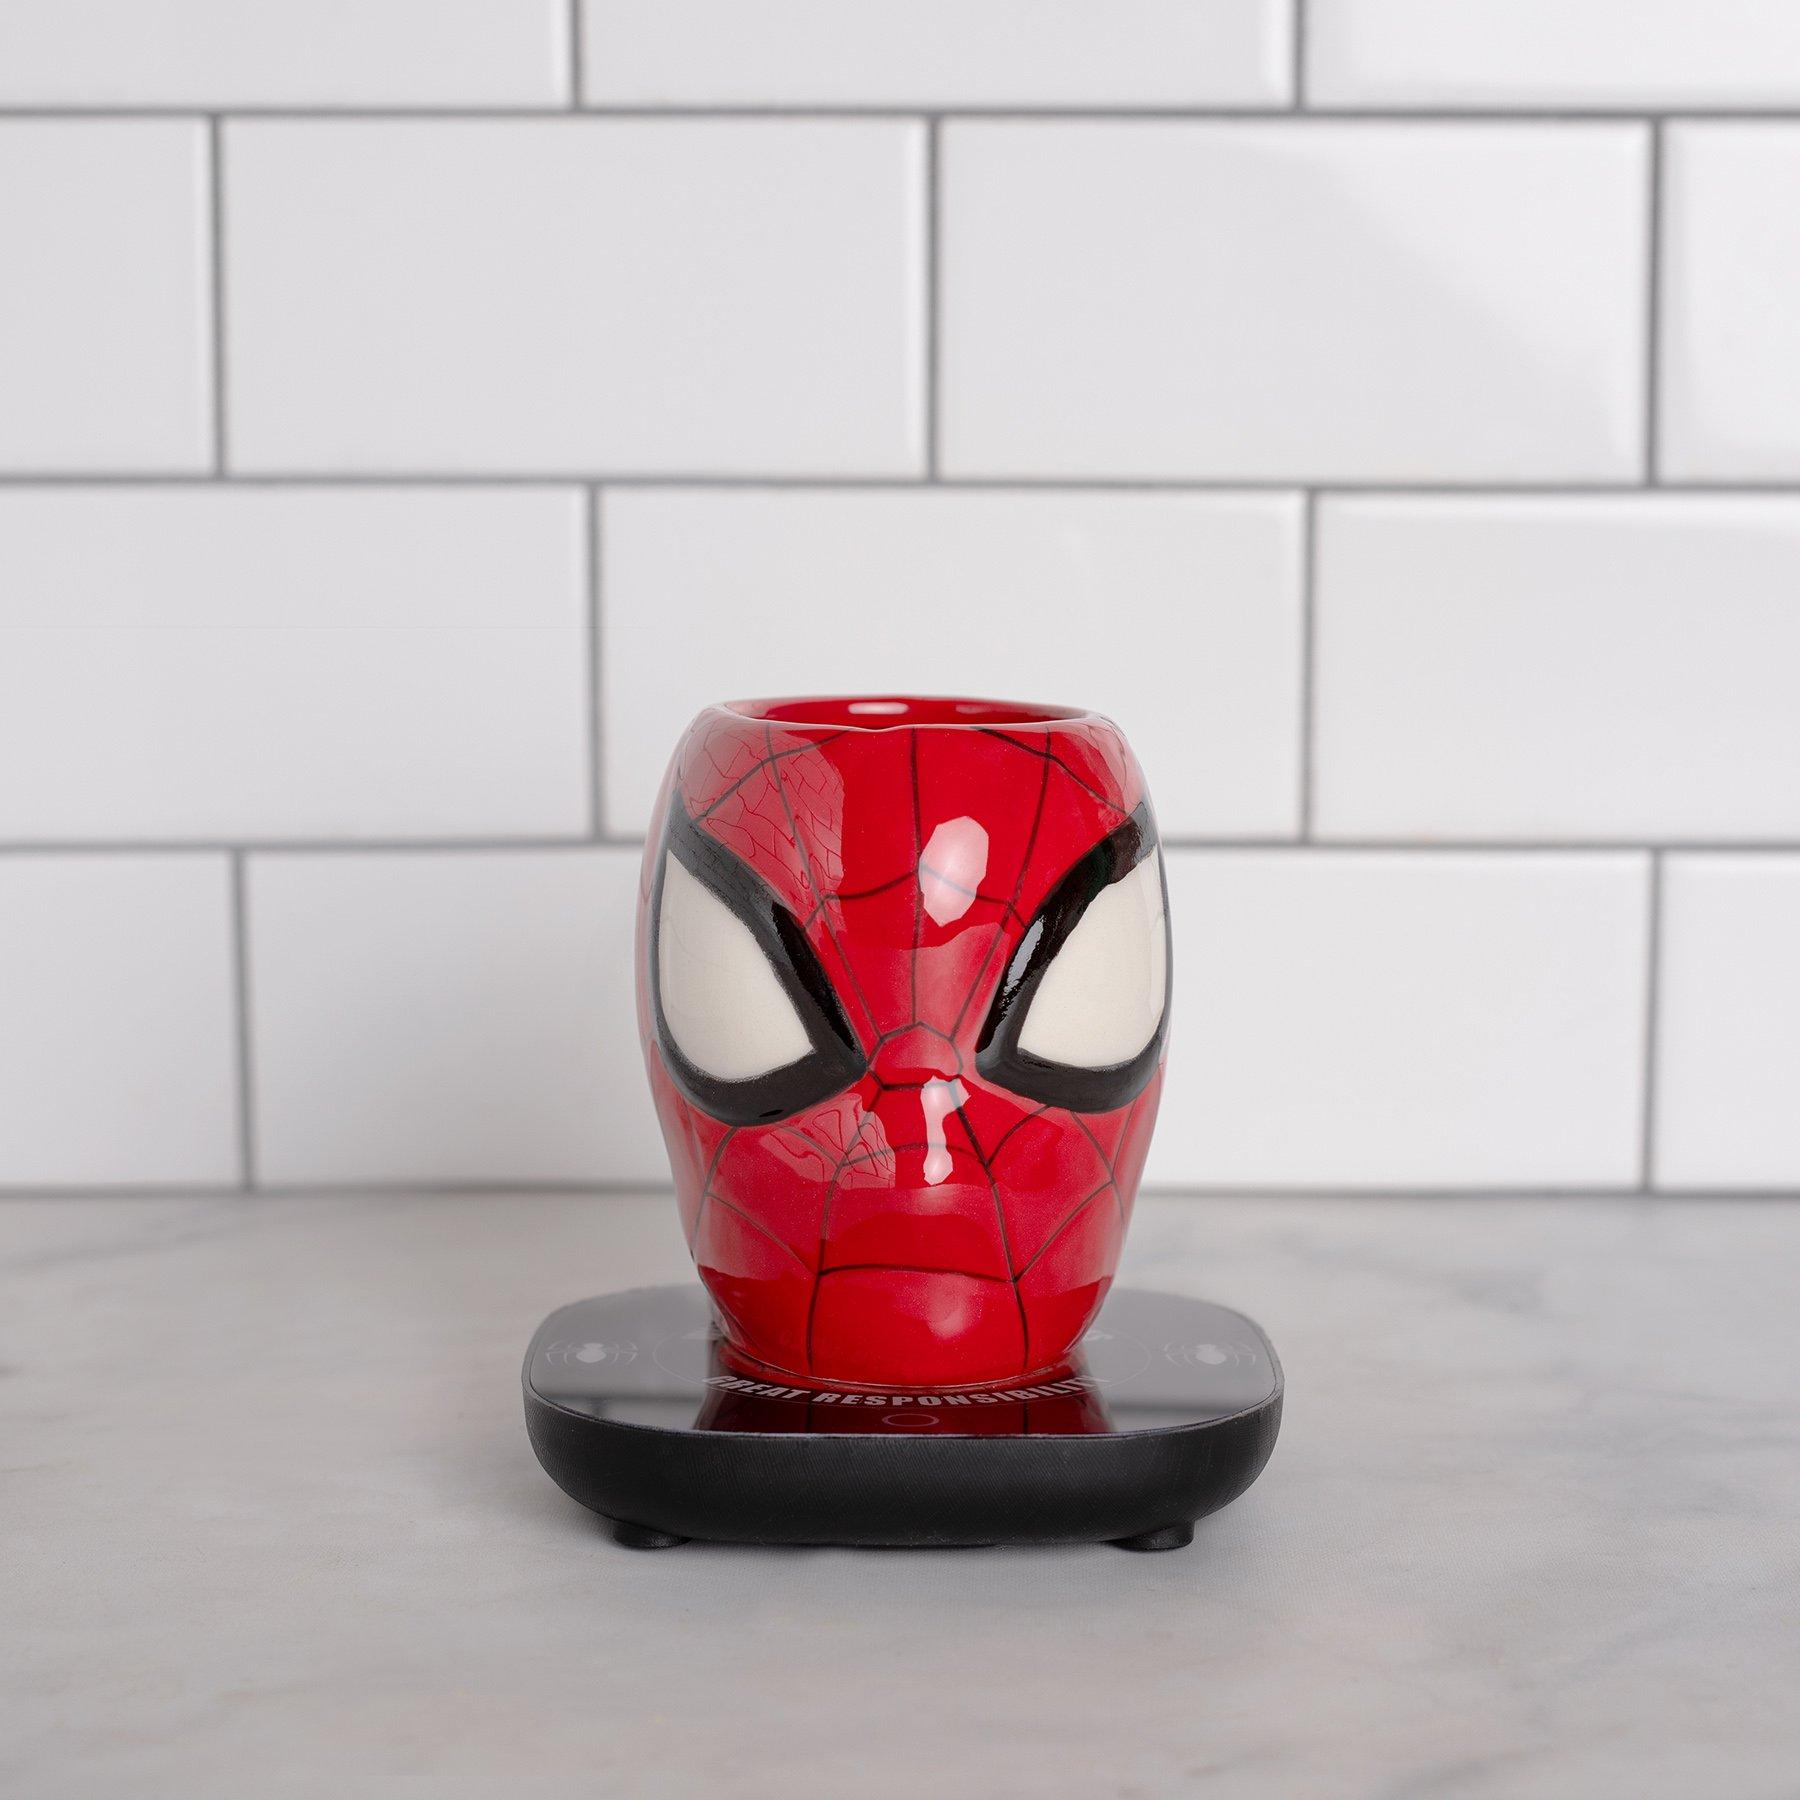 https://media.gamestop.com/i/gamestop/20005571_ALT06/Marvels-Spiderman-Mug-Warmer-with-Molded-Mug?$pdp$